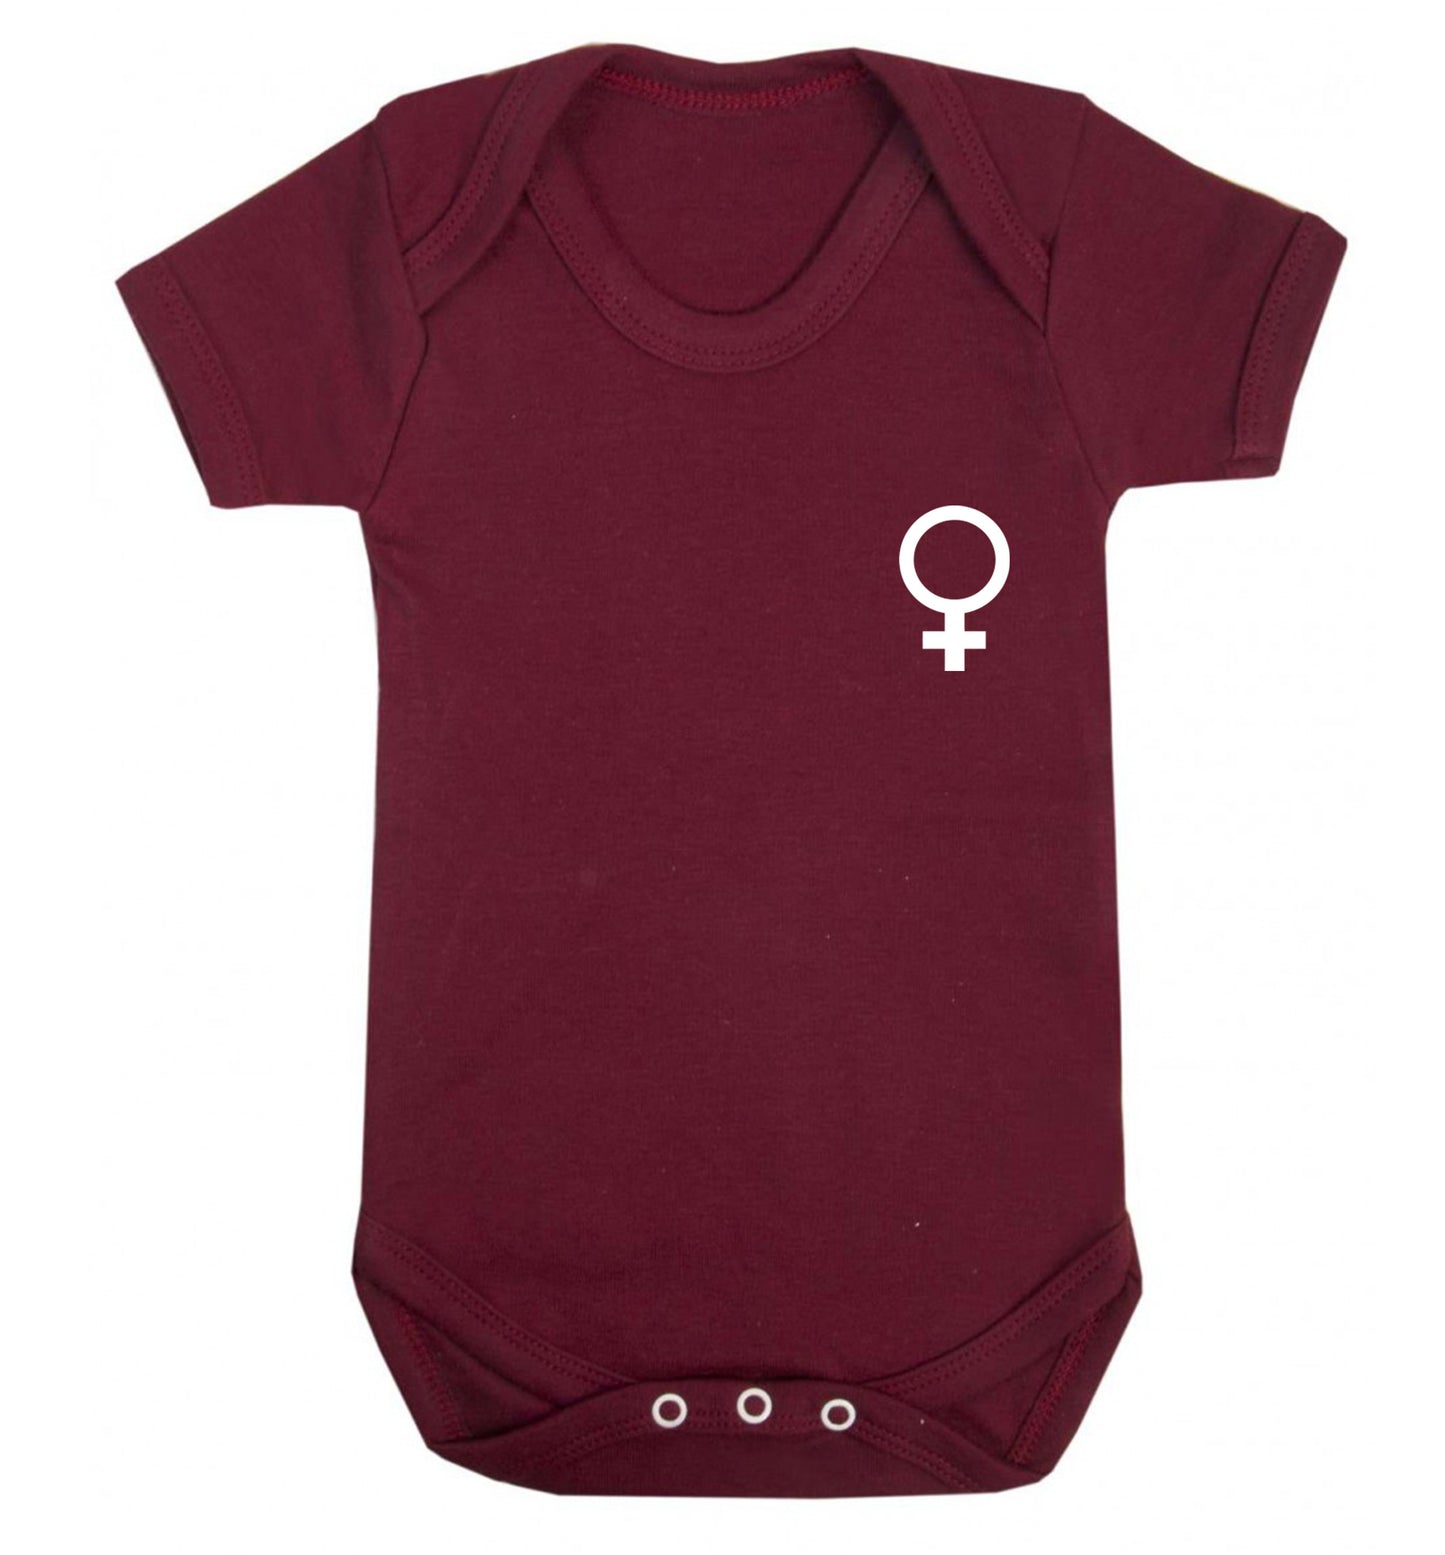 Female pocket symbol Baby Vest maroon 18-24 months